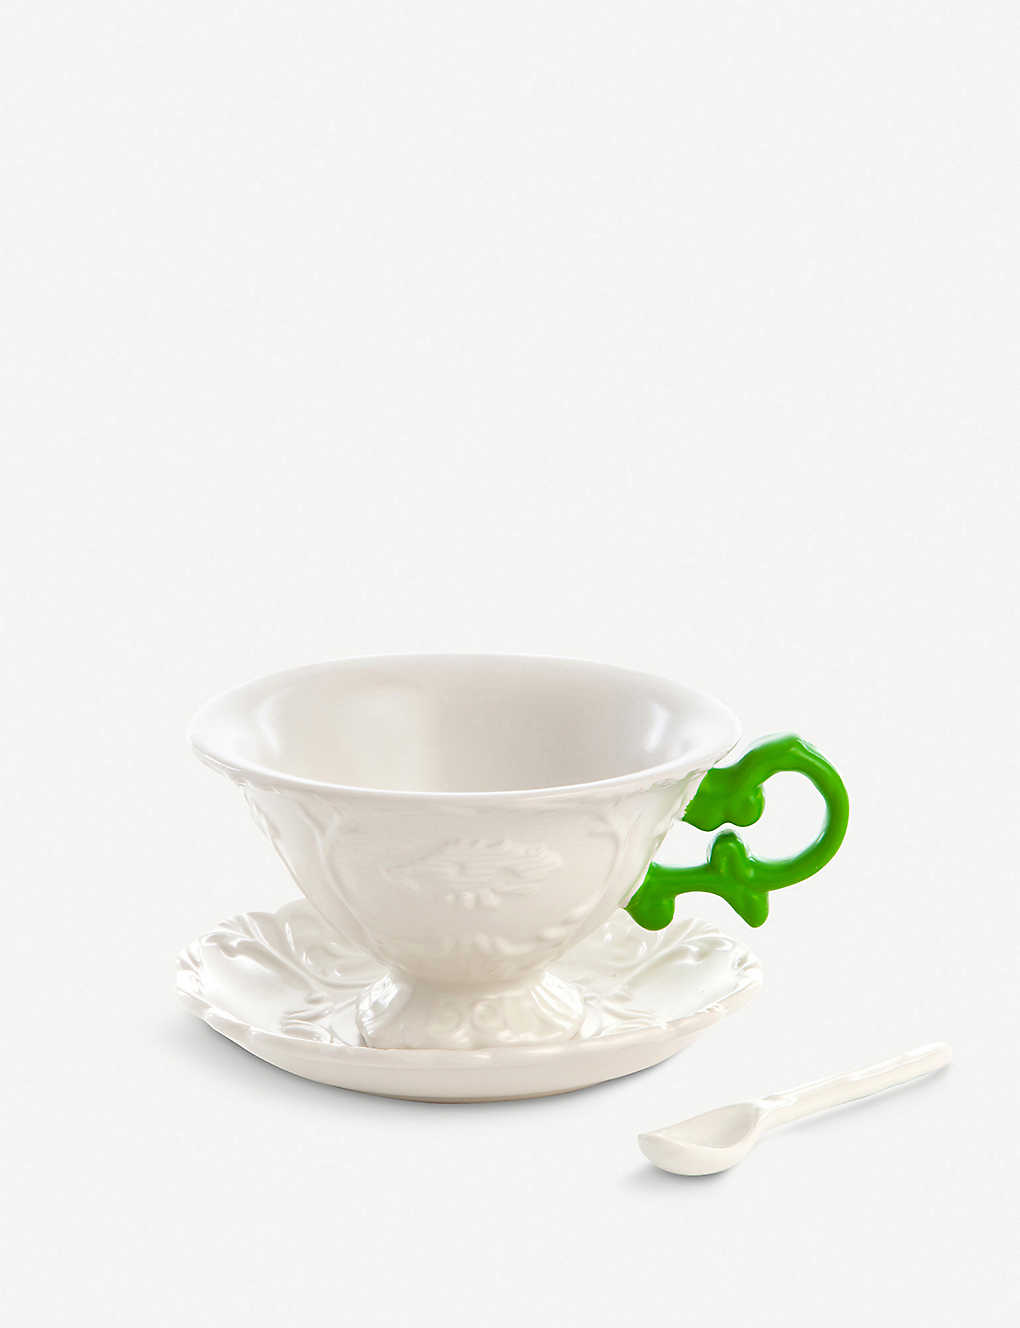 SELETTI アイウェアーズ ポーセレイン ティーカップ セット I-Wares porcelain tea cup set